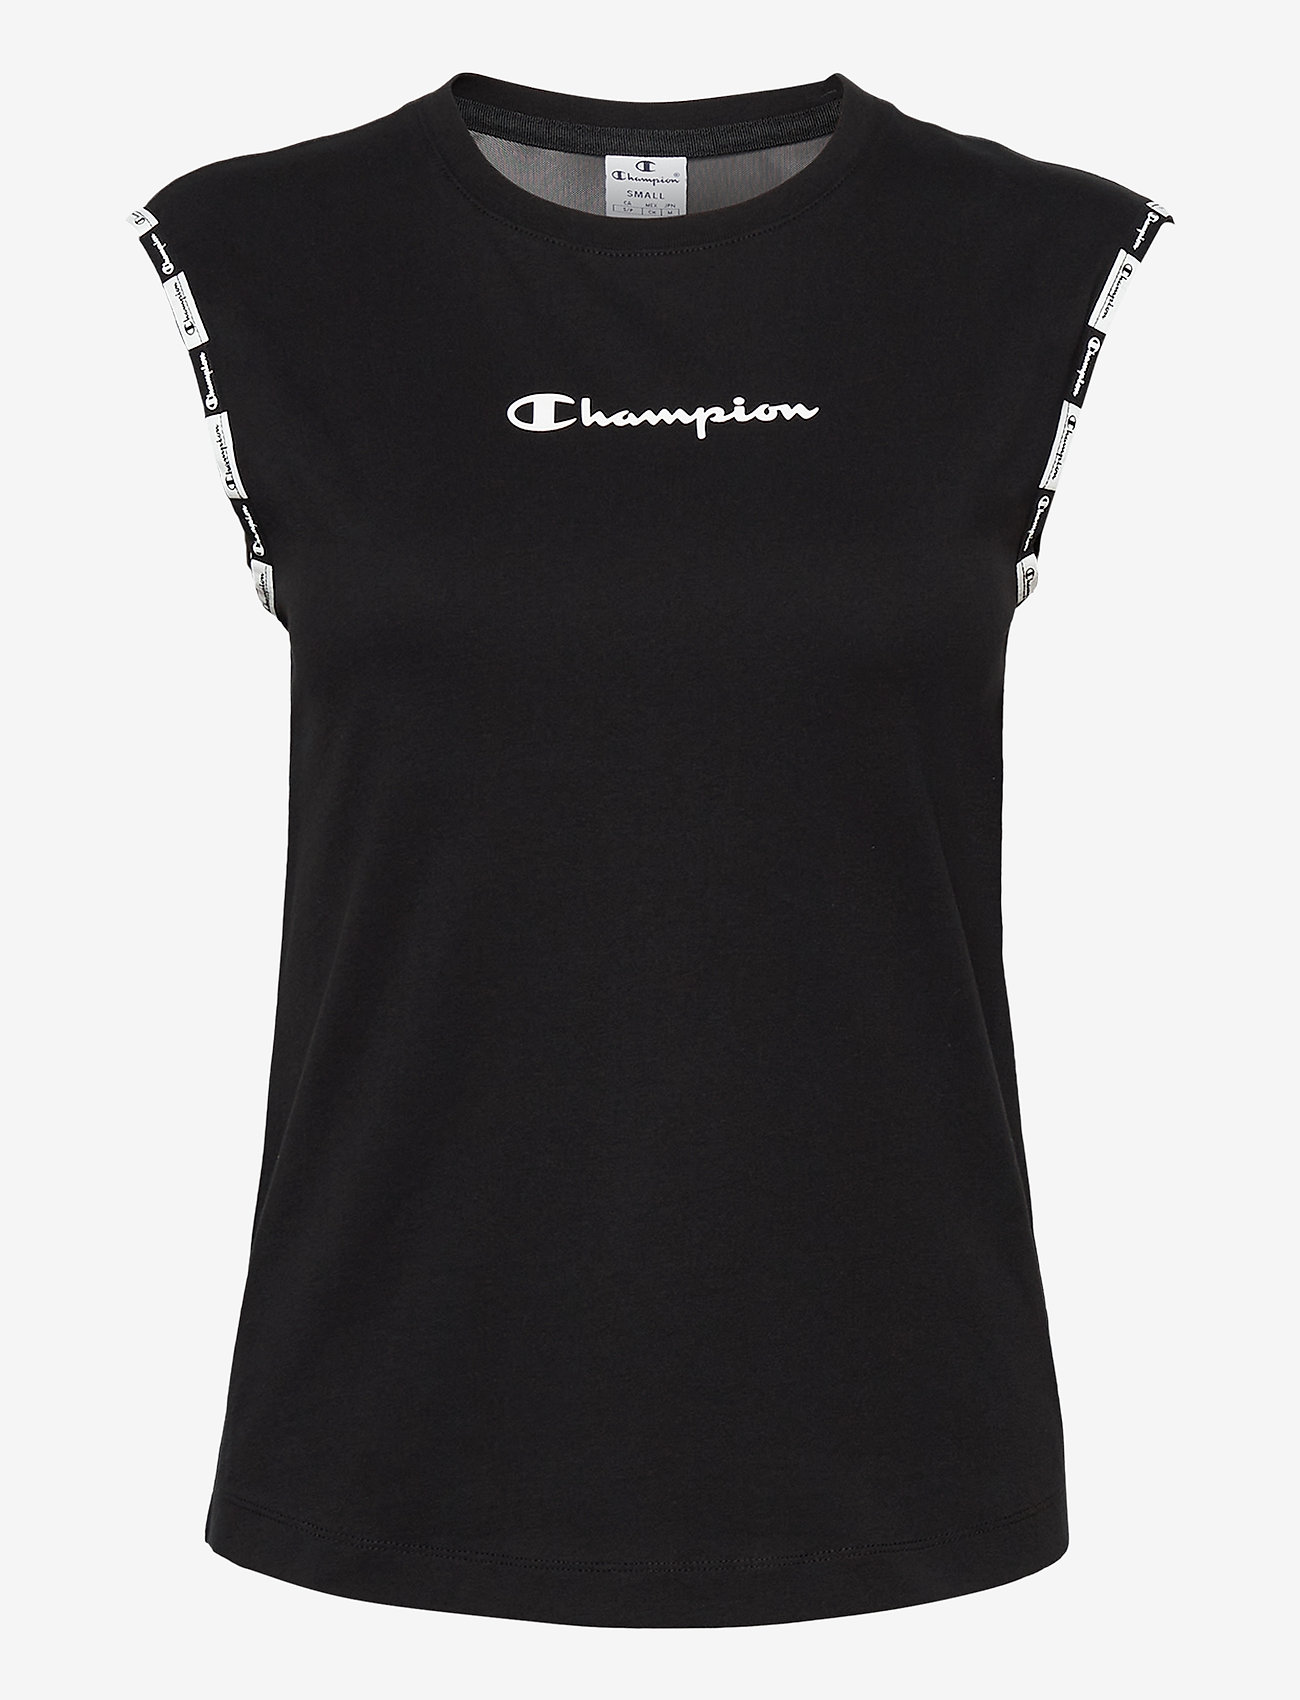 champion sleeveless t shirt